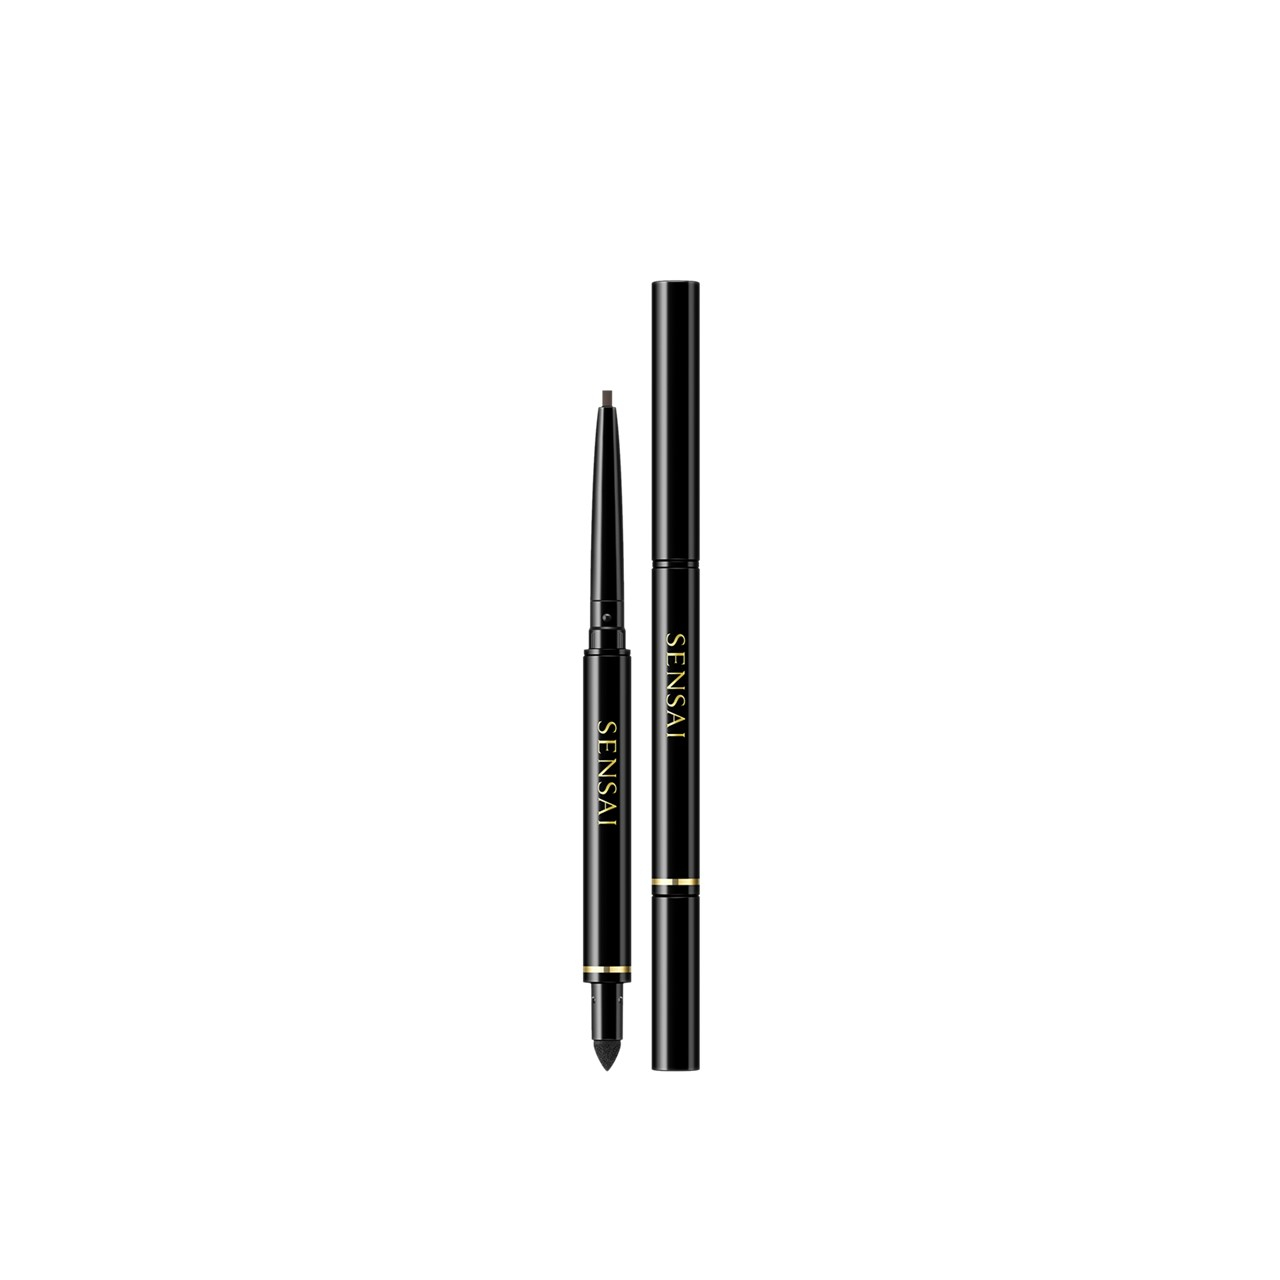 SENSAI Lasting Eyeliner Pencil 02 Deep Brown 0.1g (0.003 oz)